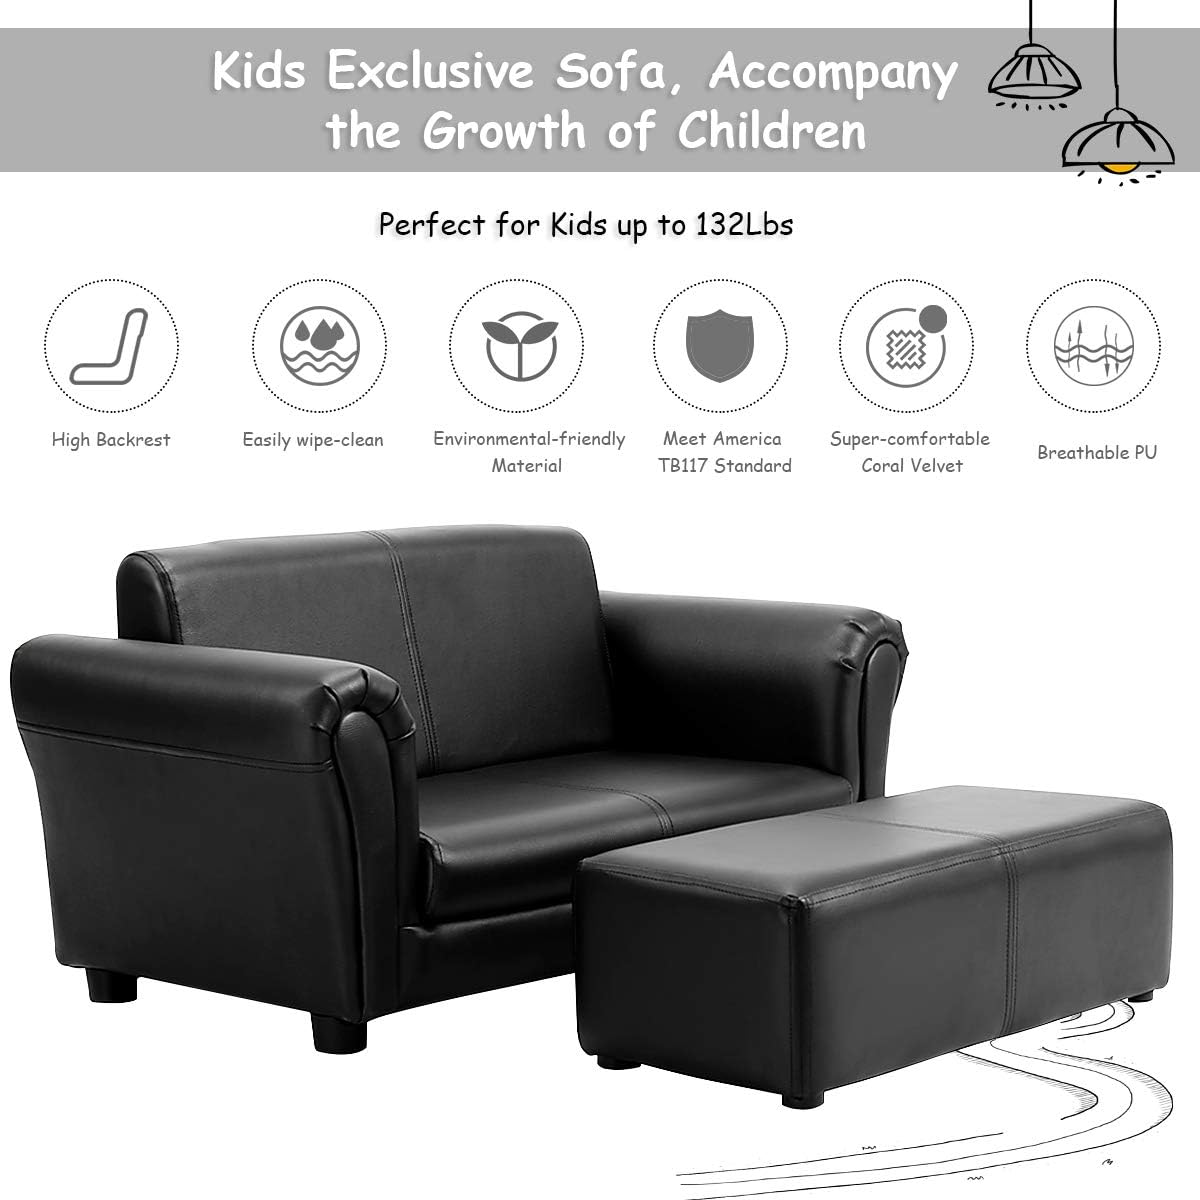 Juego de sofá para niños con otomano sofá tapizado y 2 asientos sillón para